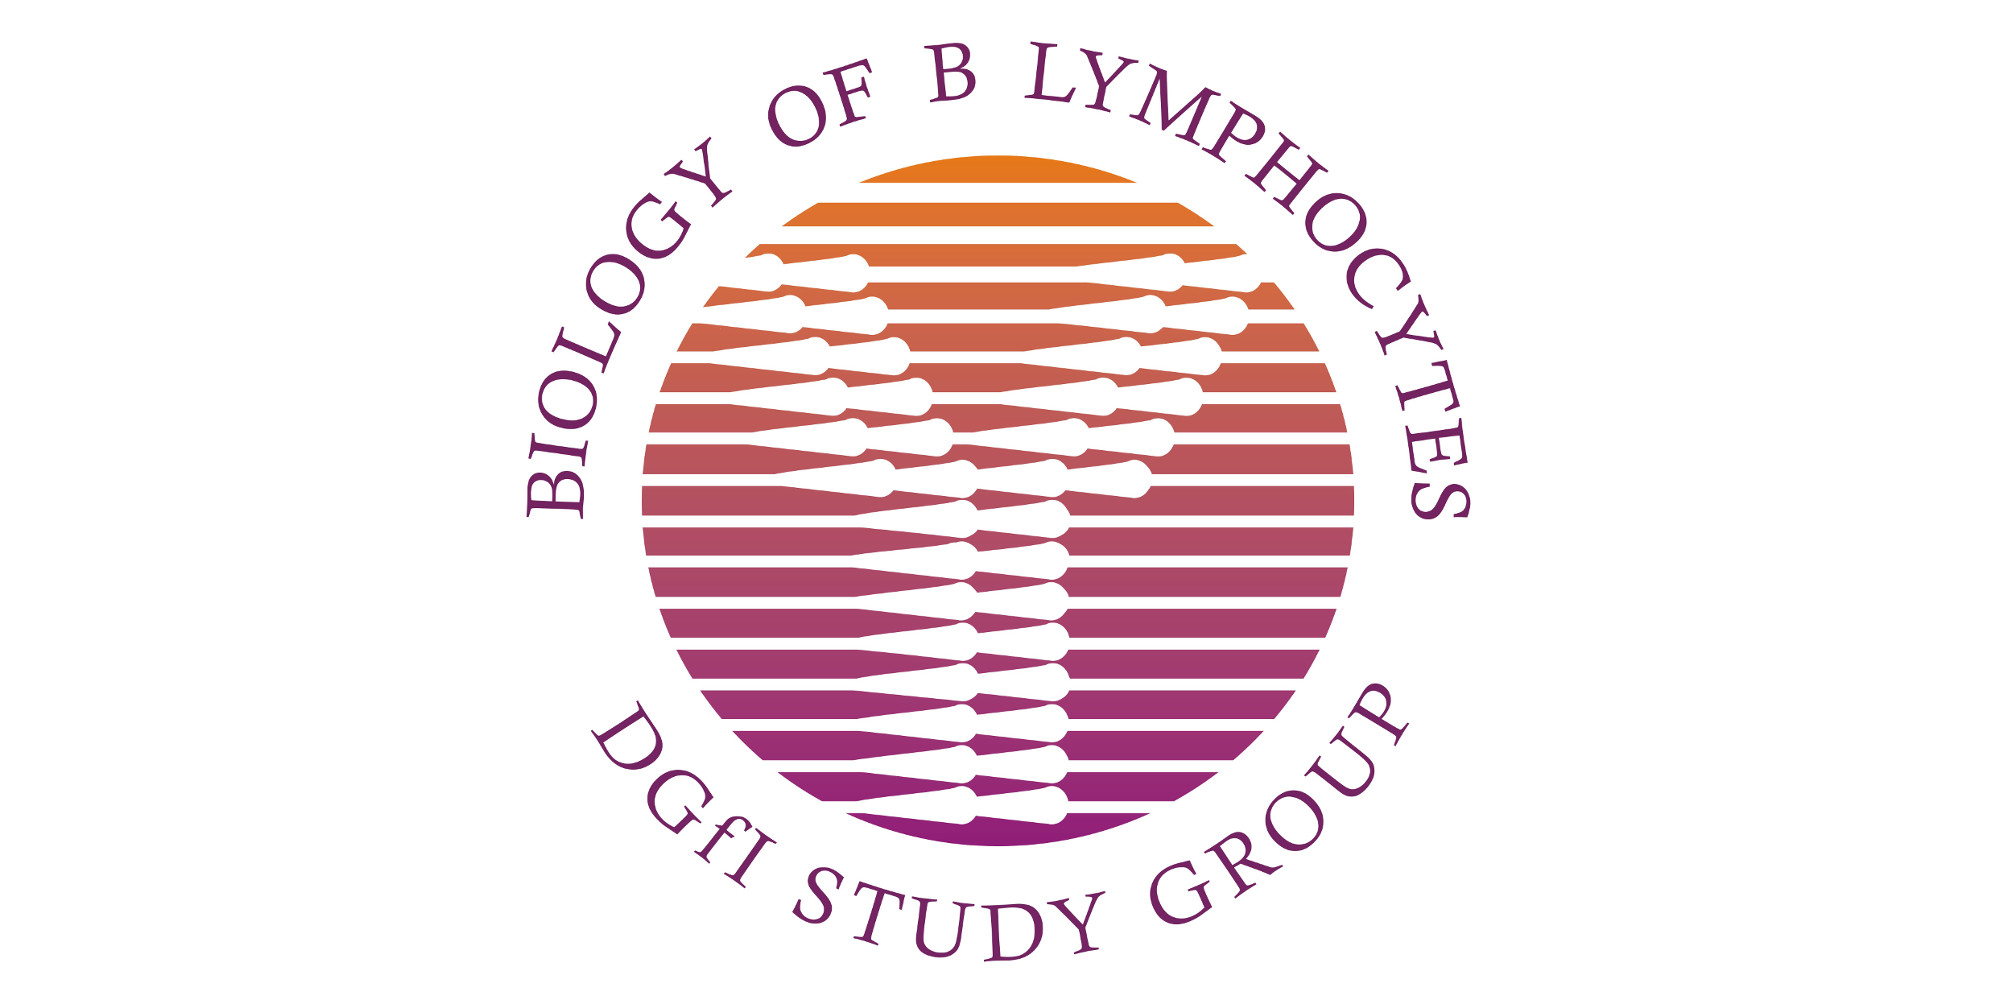 Towards page "Biology of B Lymphocytes